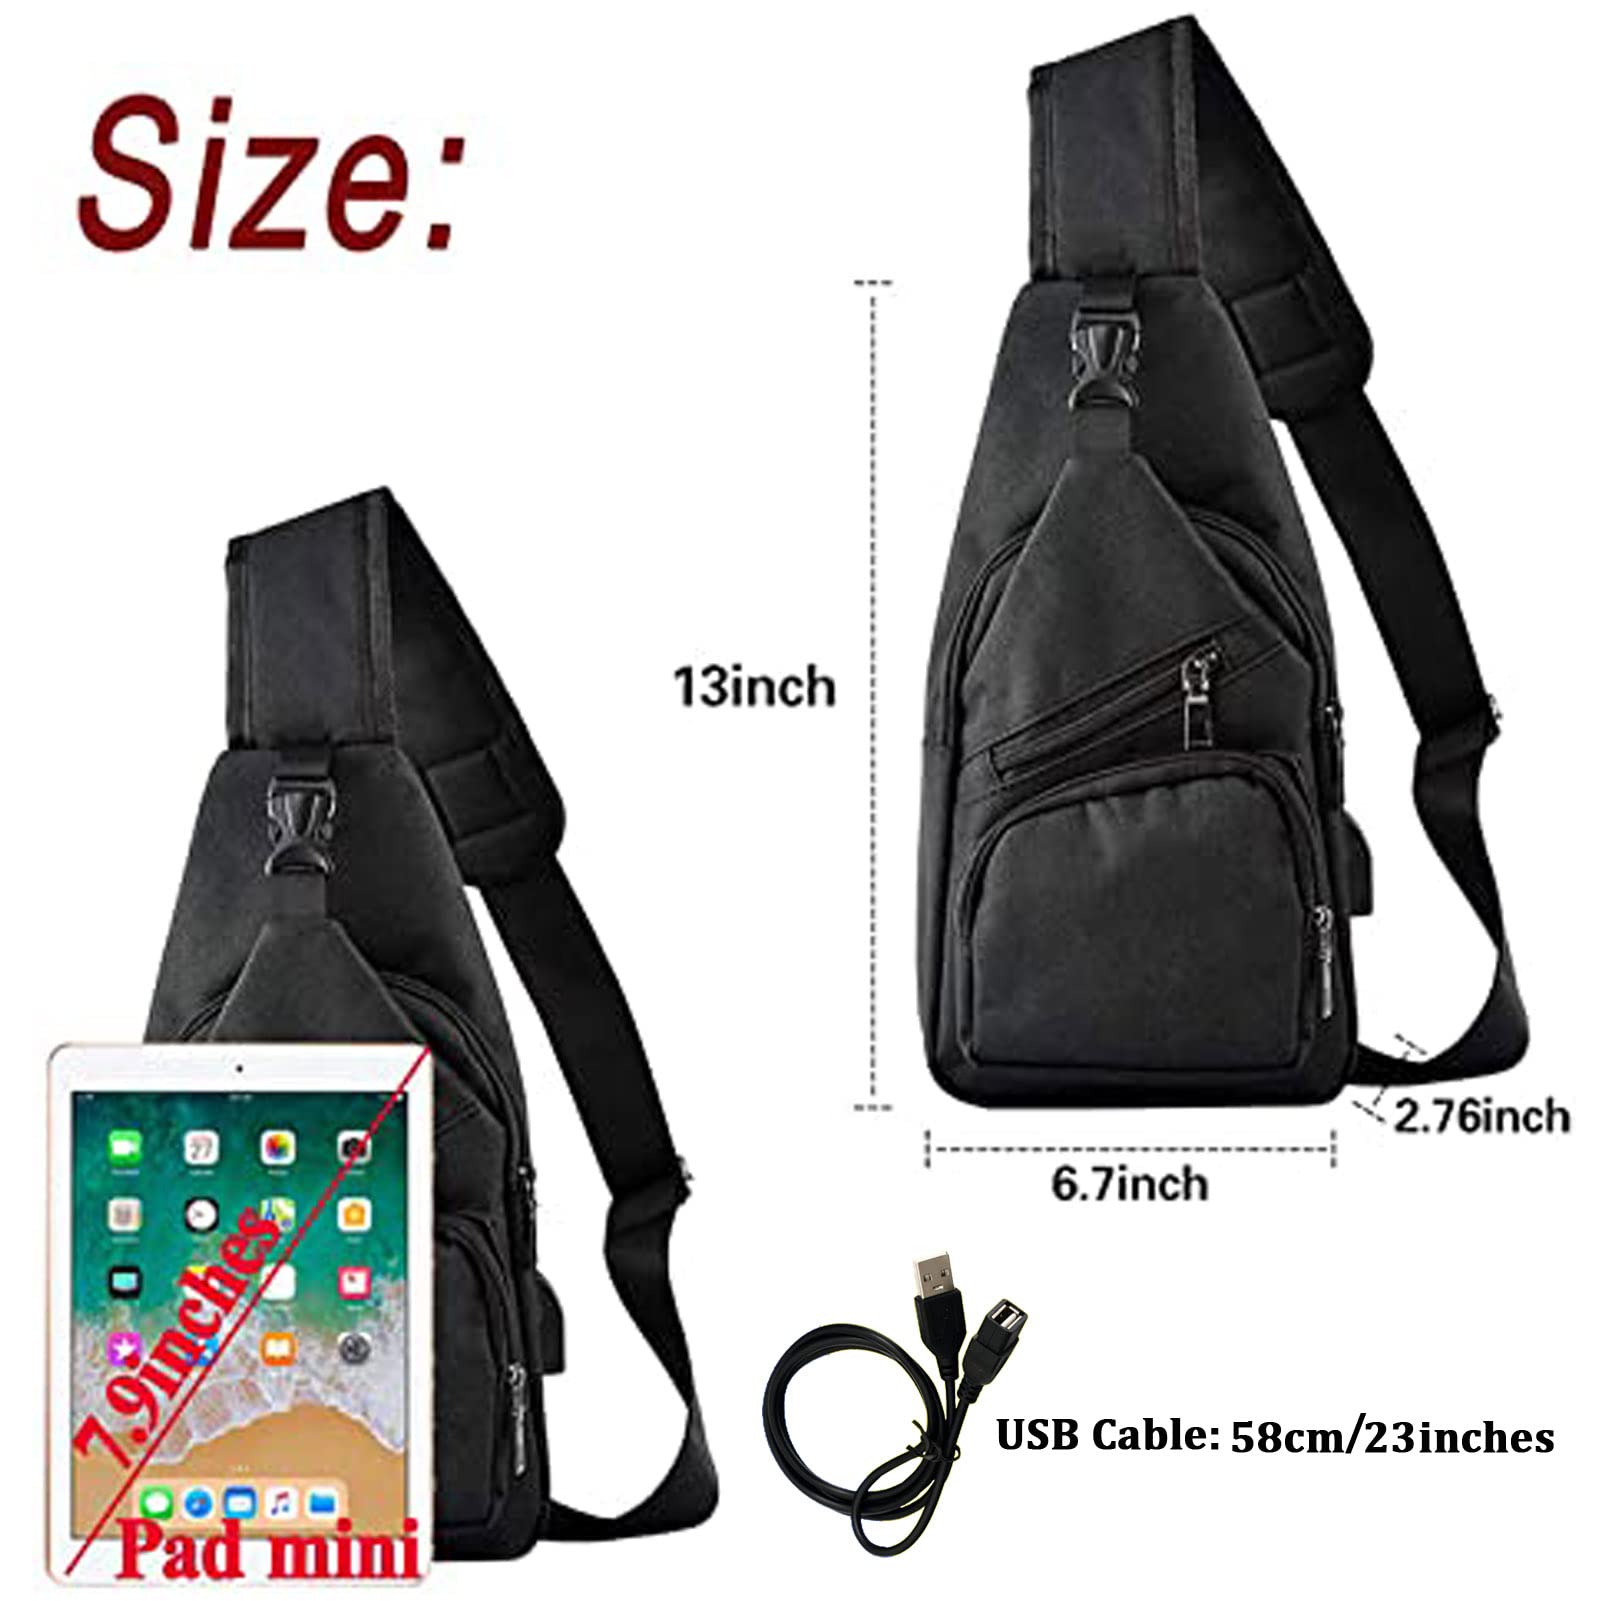 Sling Bag - Shoulder Backpack Chest Bags Crossbody Daypack for Women & Men with USB Charging Port for Travel/Hiking/Outdoor (S-Black)